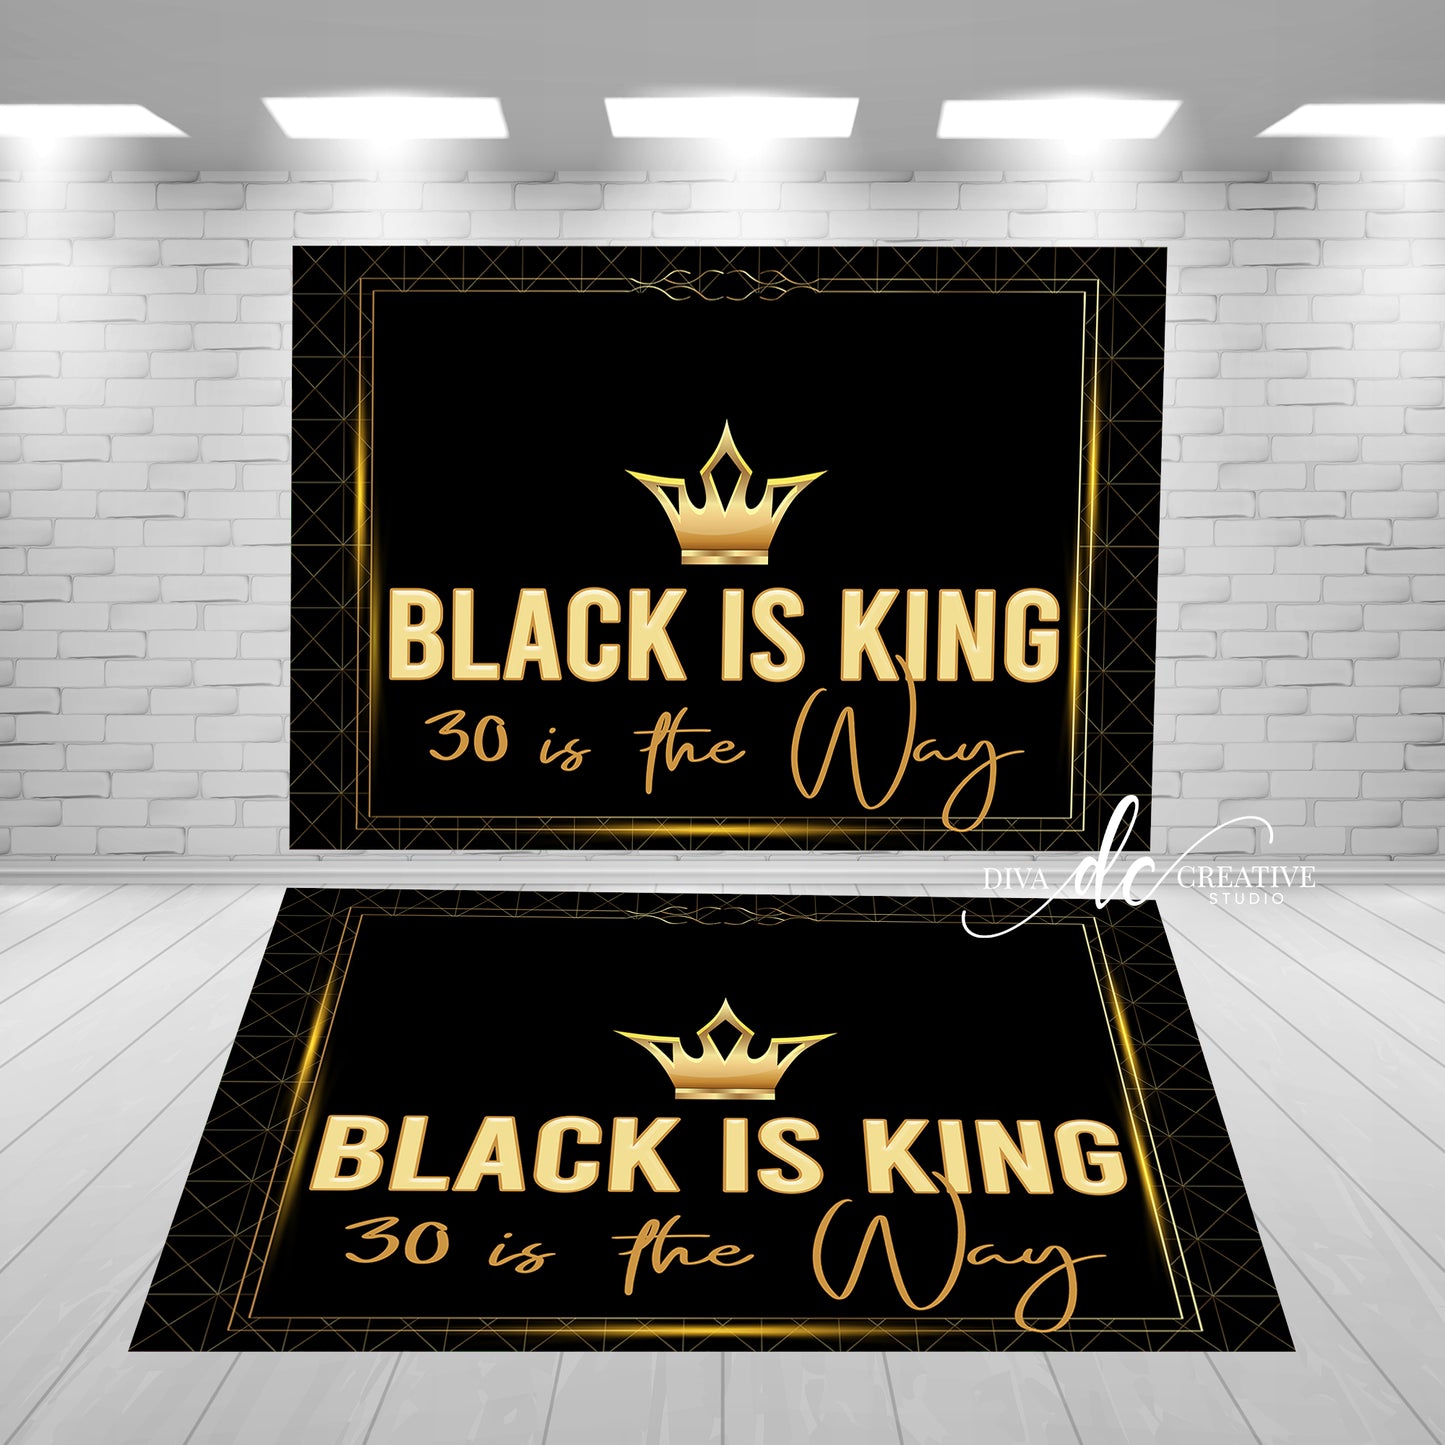 Black is King Digital Floor Wrap (You Print Yourself)